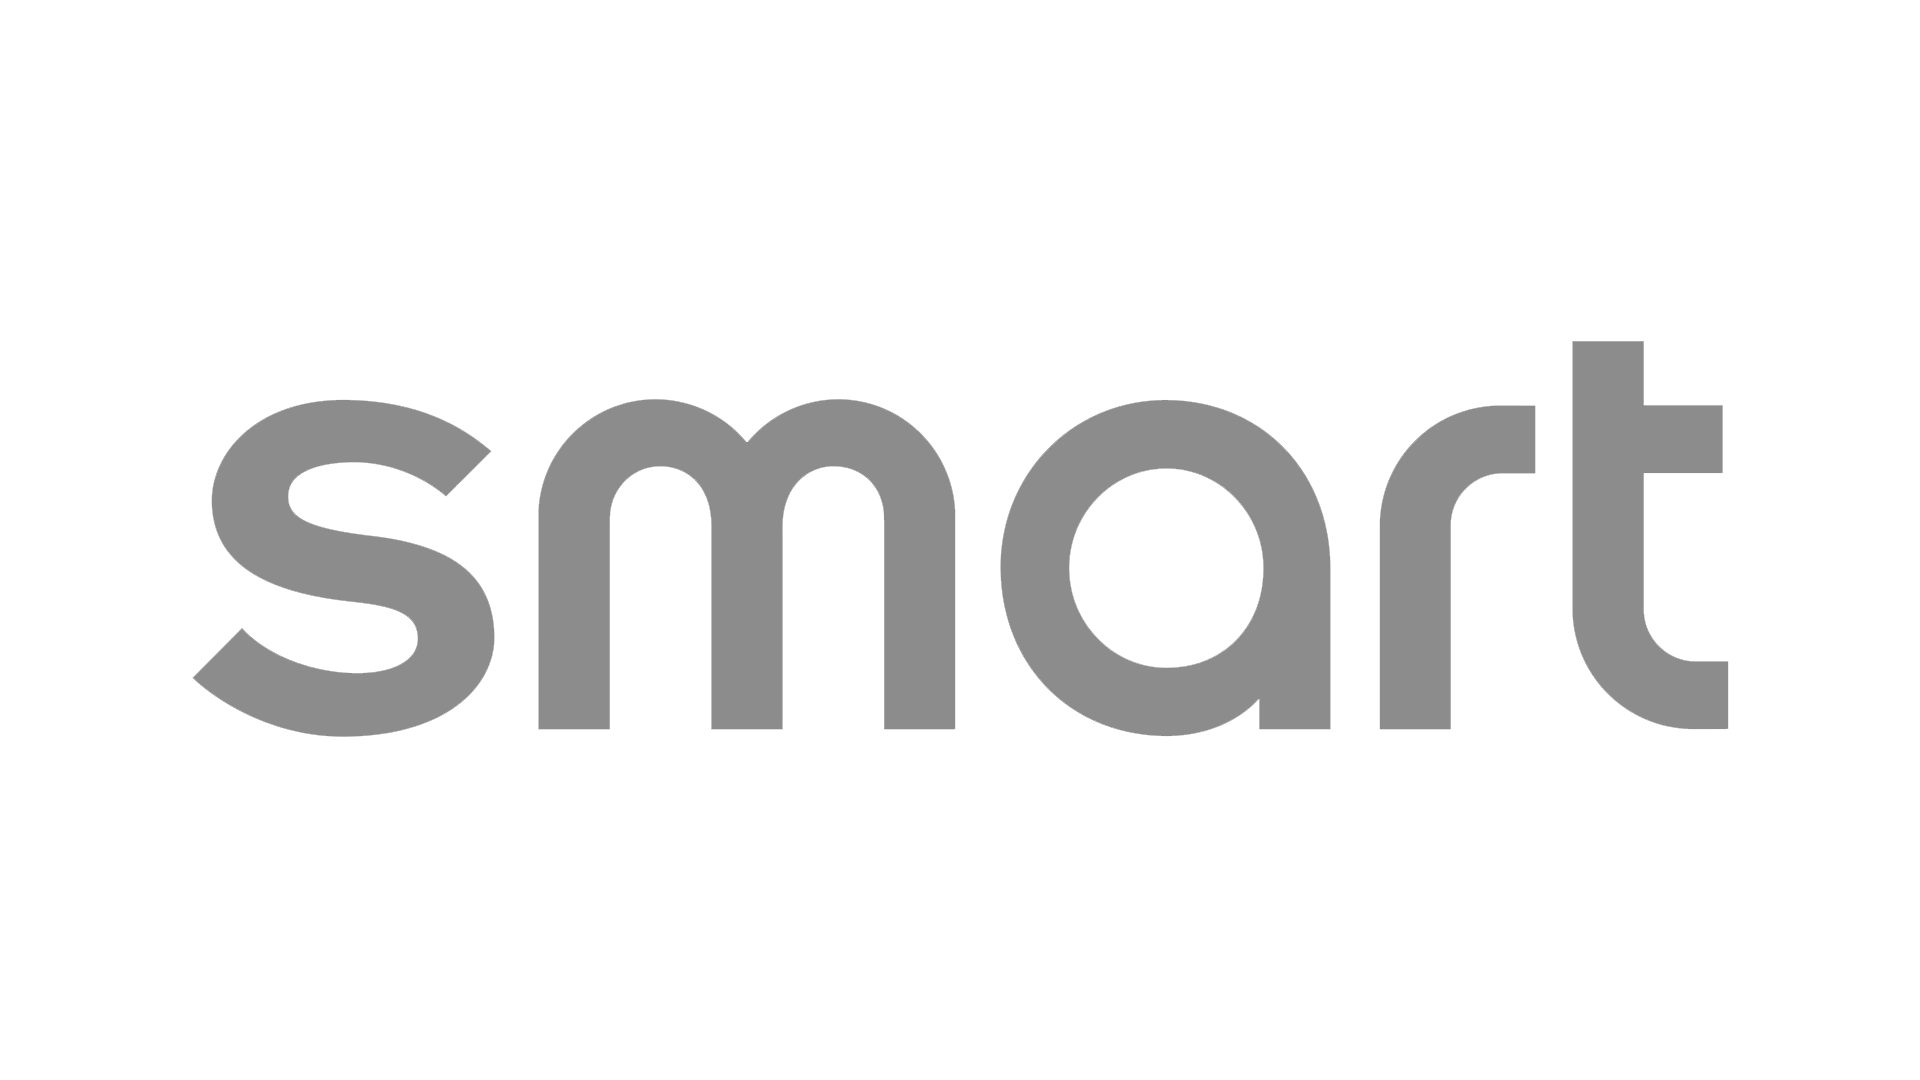 Get Smart Logo - Smart Logo, HD Png, Meaning, Information | Carlogos.org